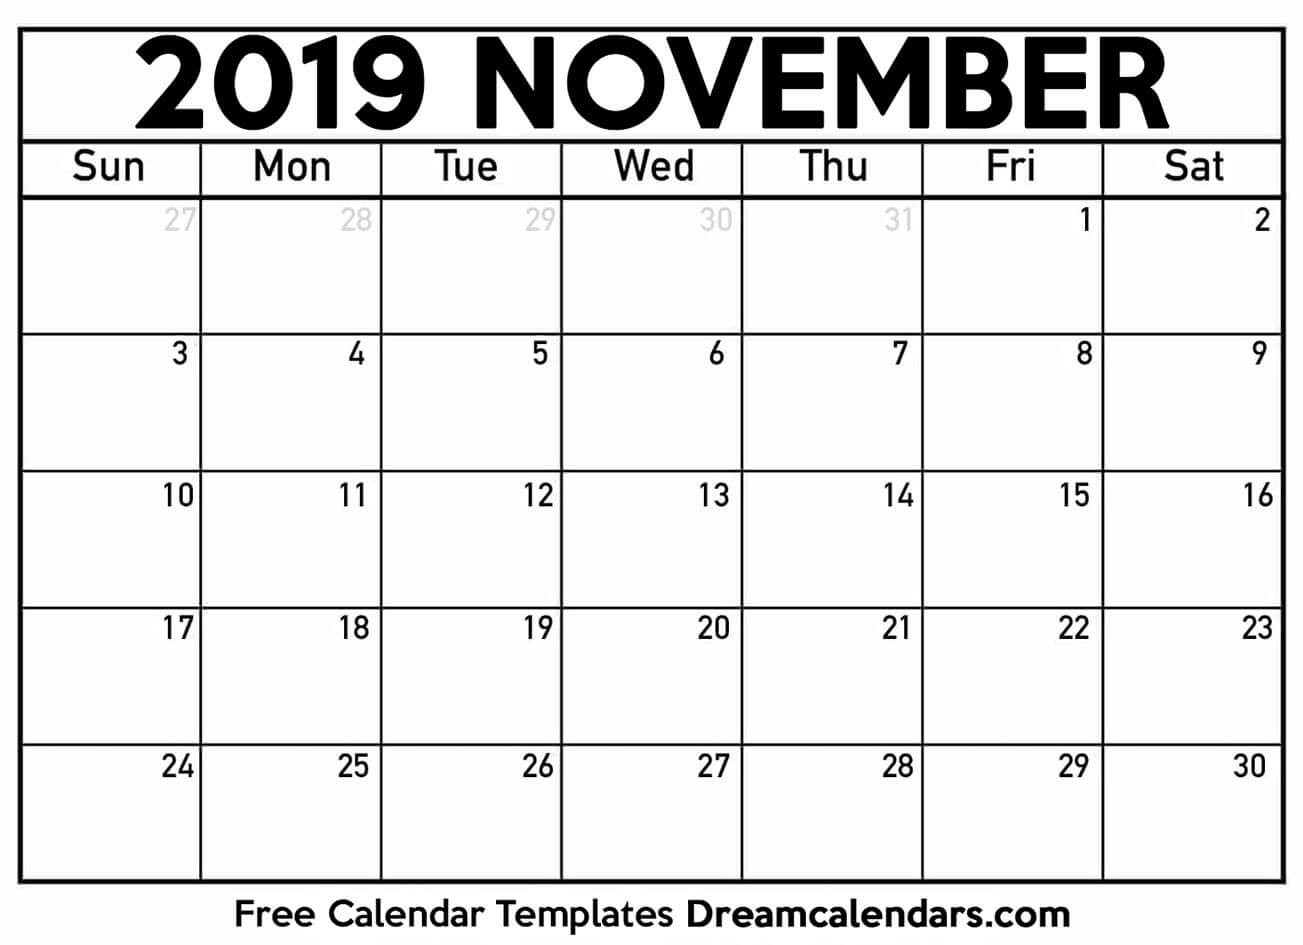 November 2019 calendar free blank printable templates